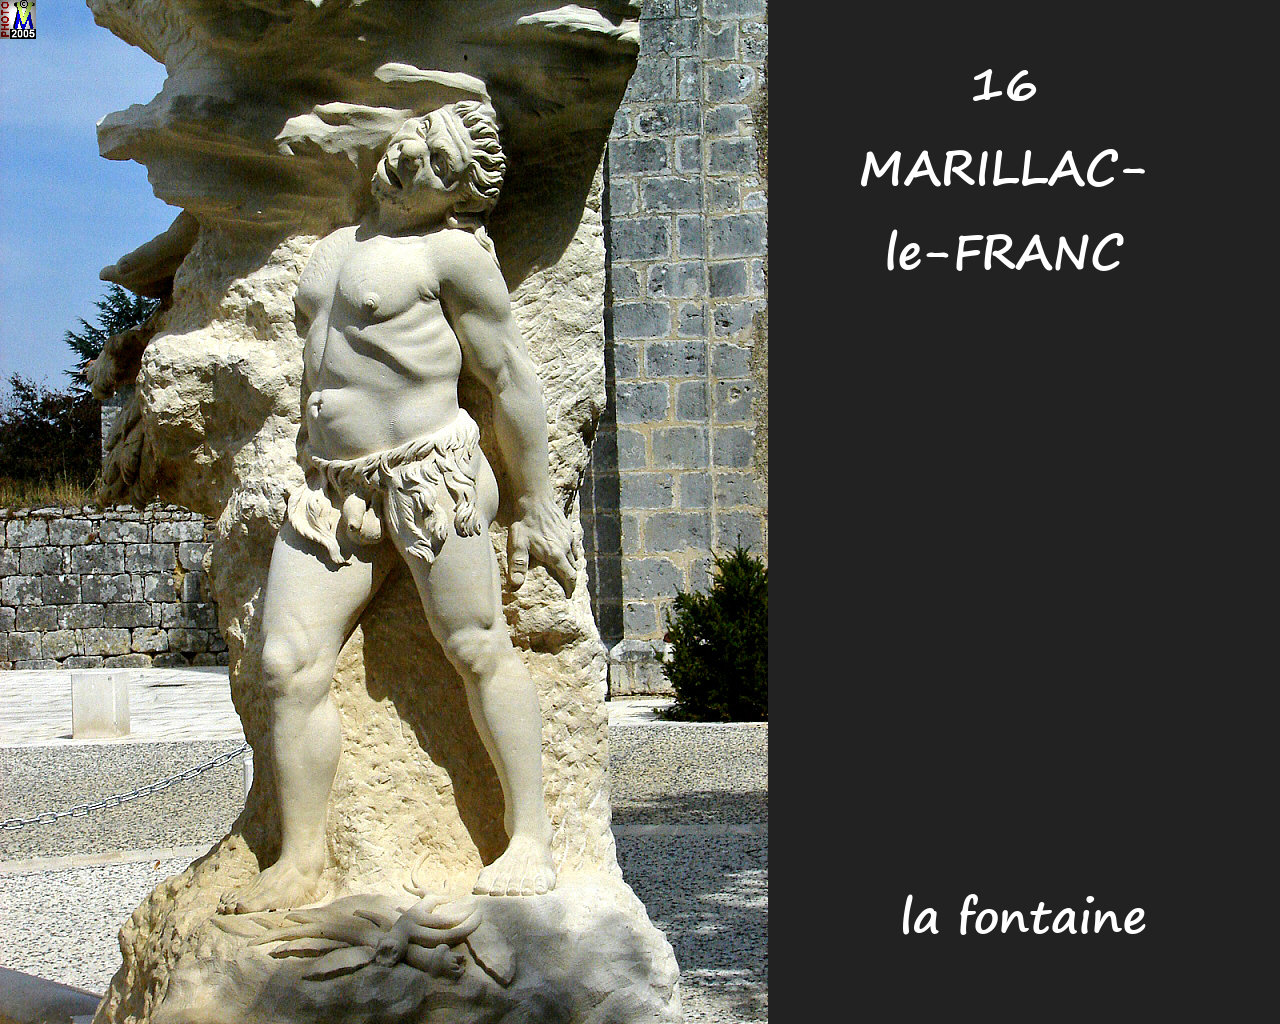 16MARILLAC-FRANC_fontaine_104.jpg